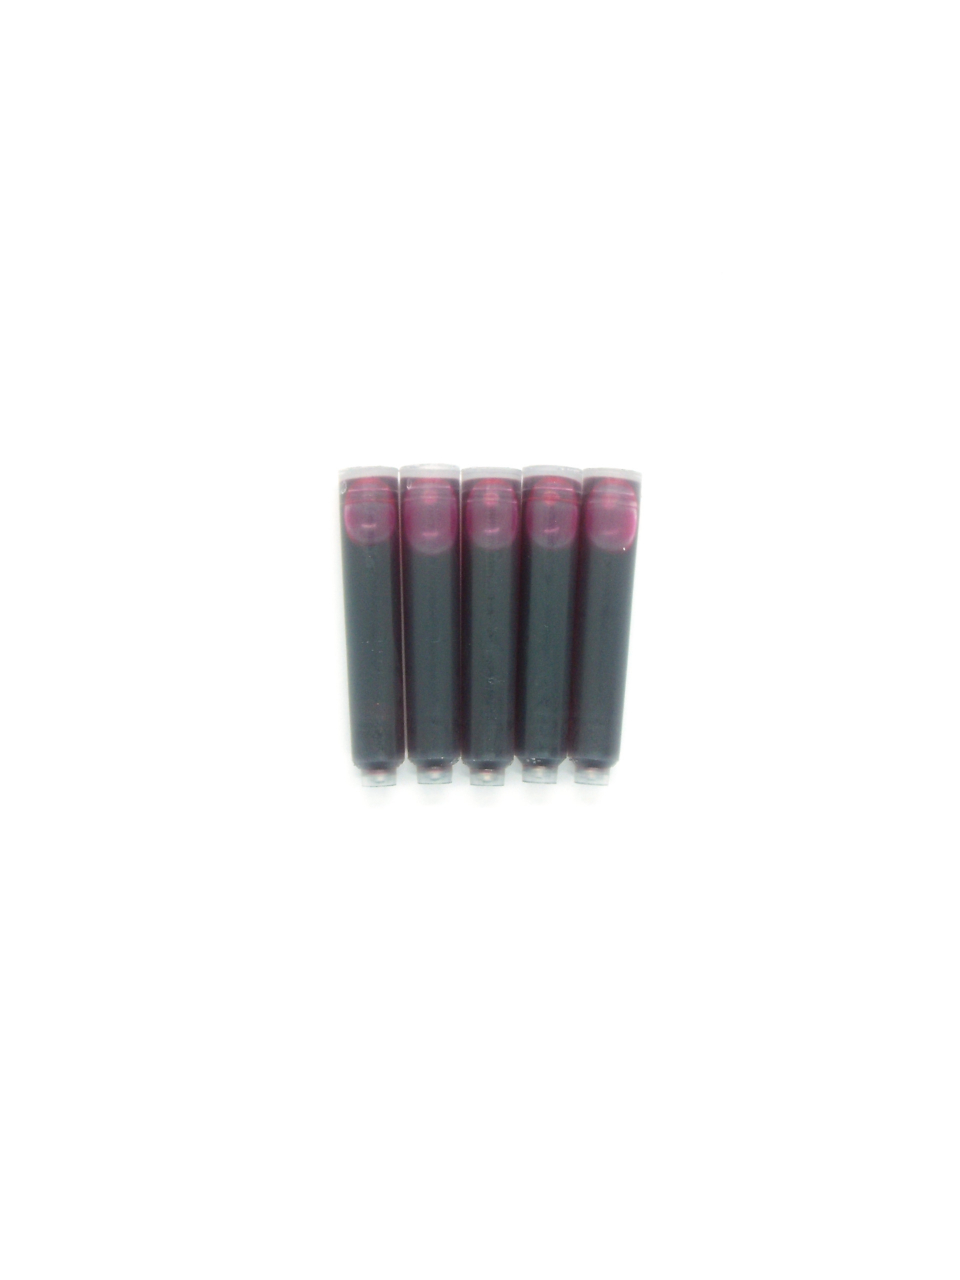 PenConverter Ink Cartridges For Sizzle Stix Fountain Pens (Pink)